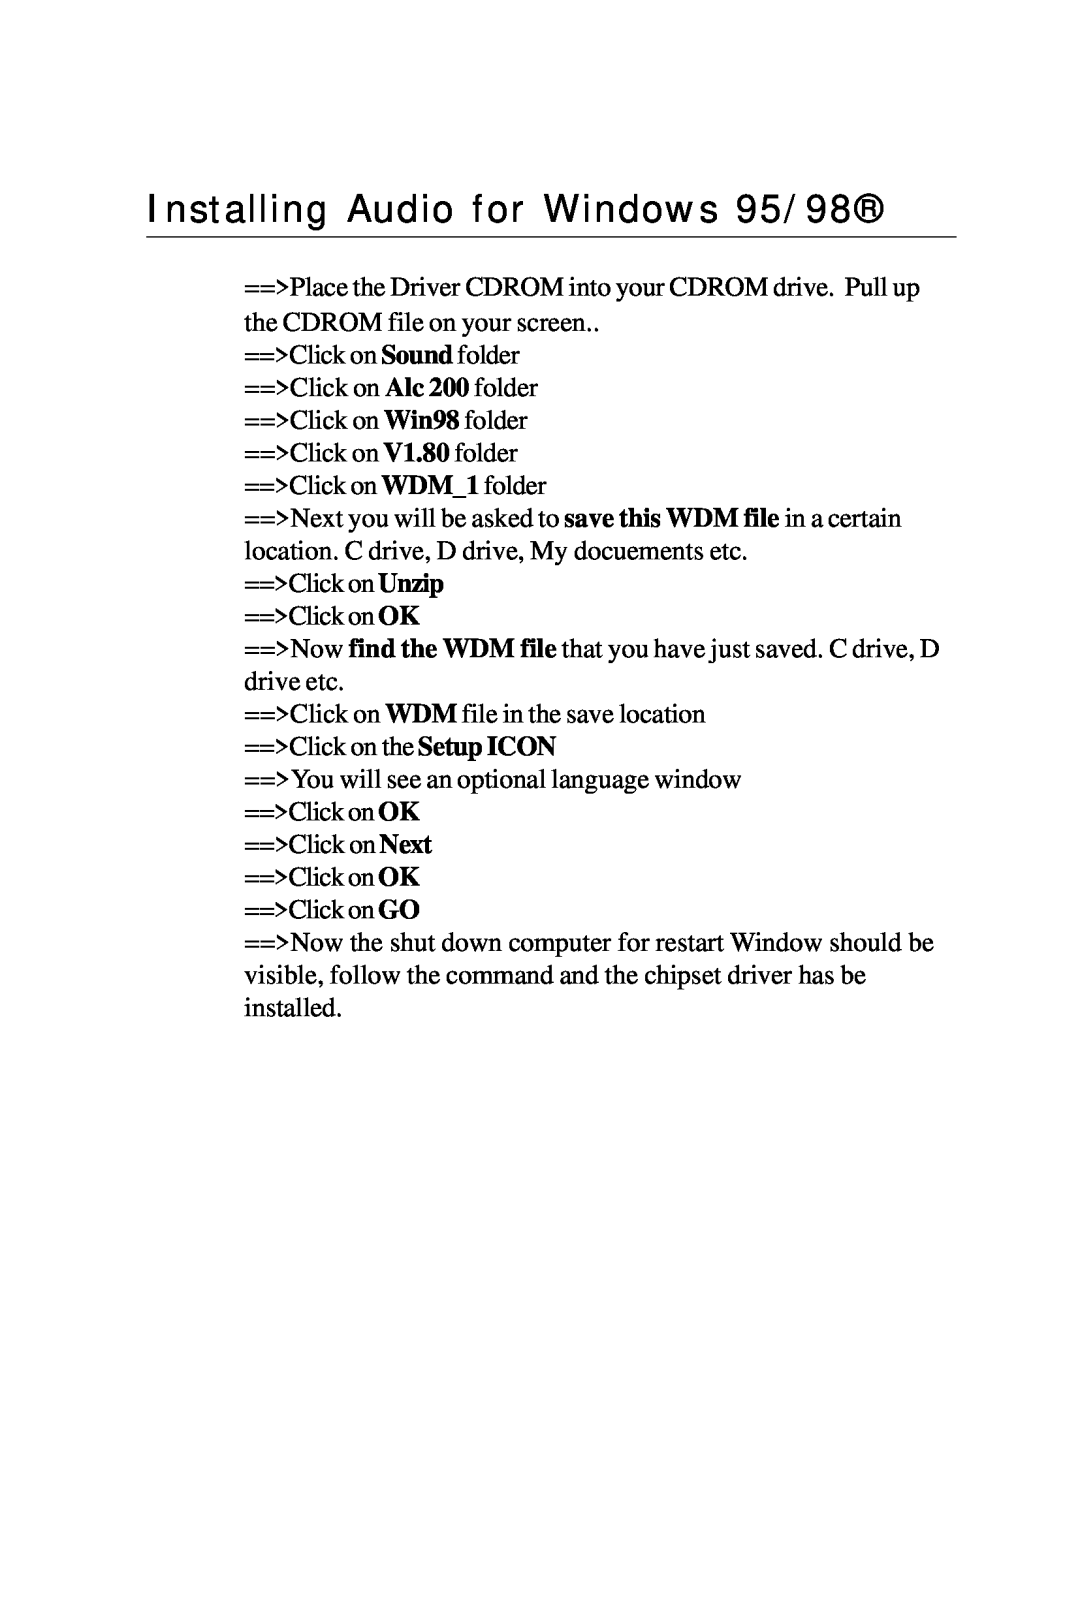 Intel PCM-6896 manual Installing Audio for Windows 95/98 